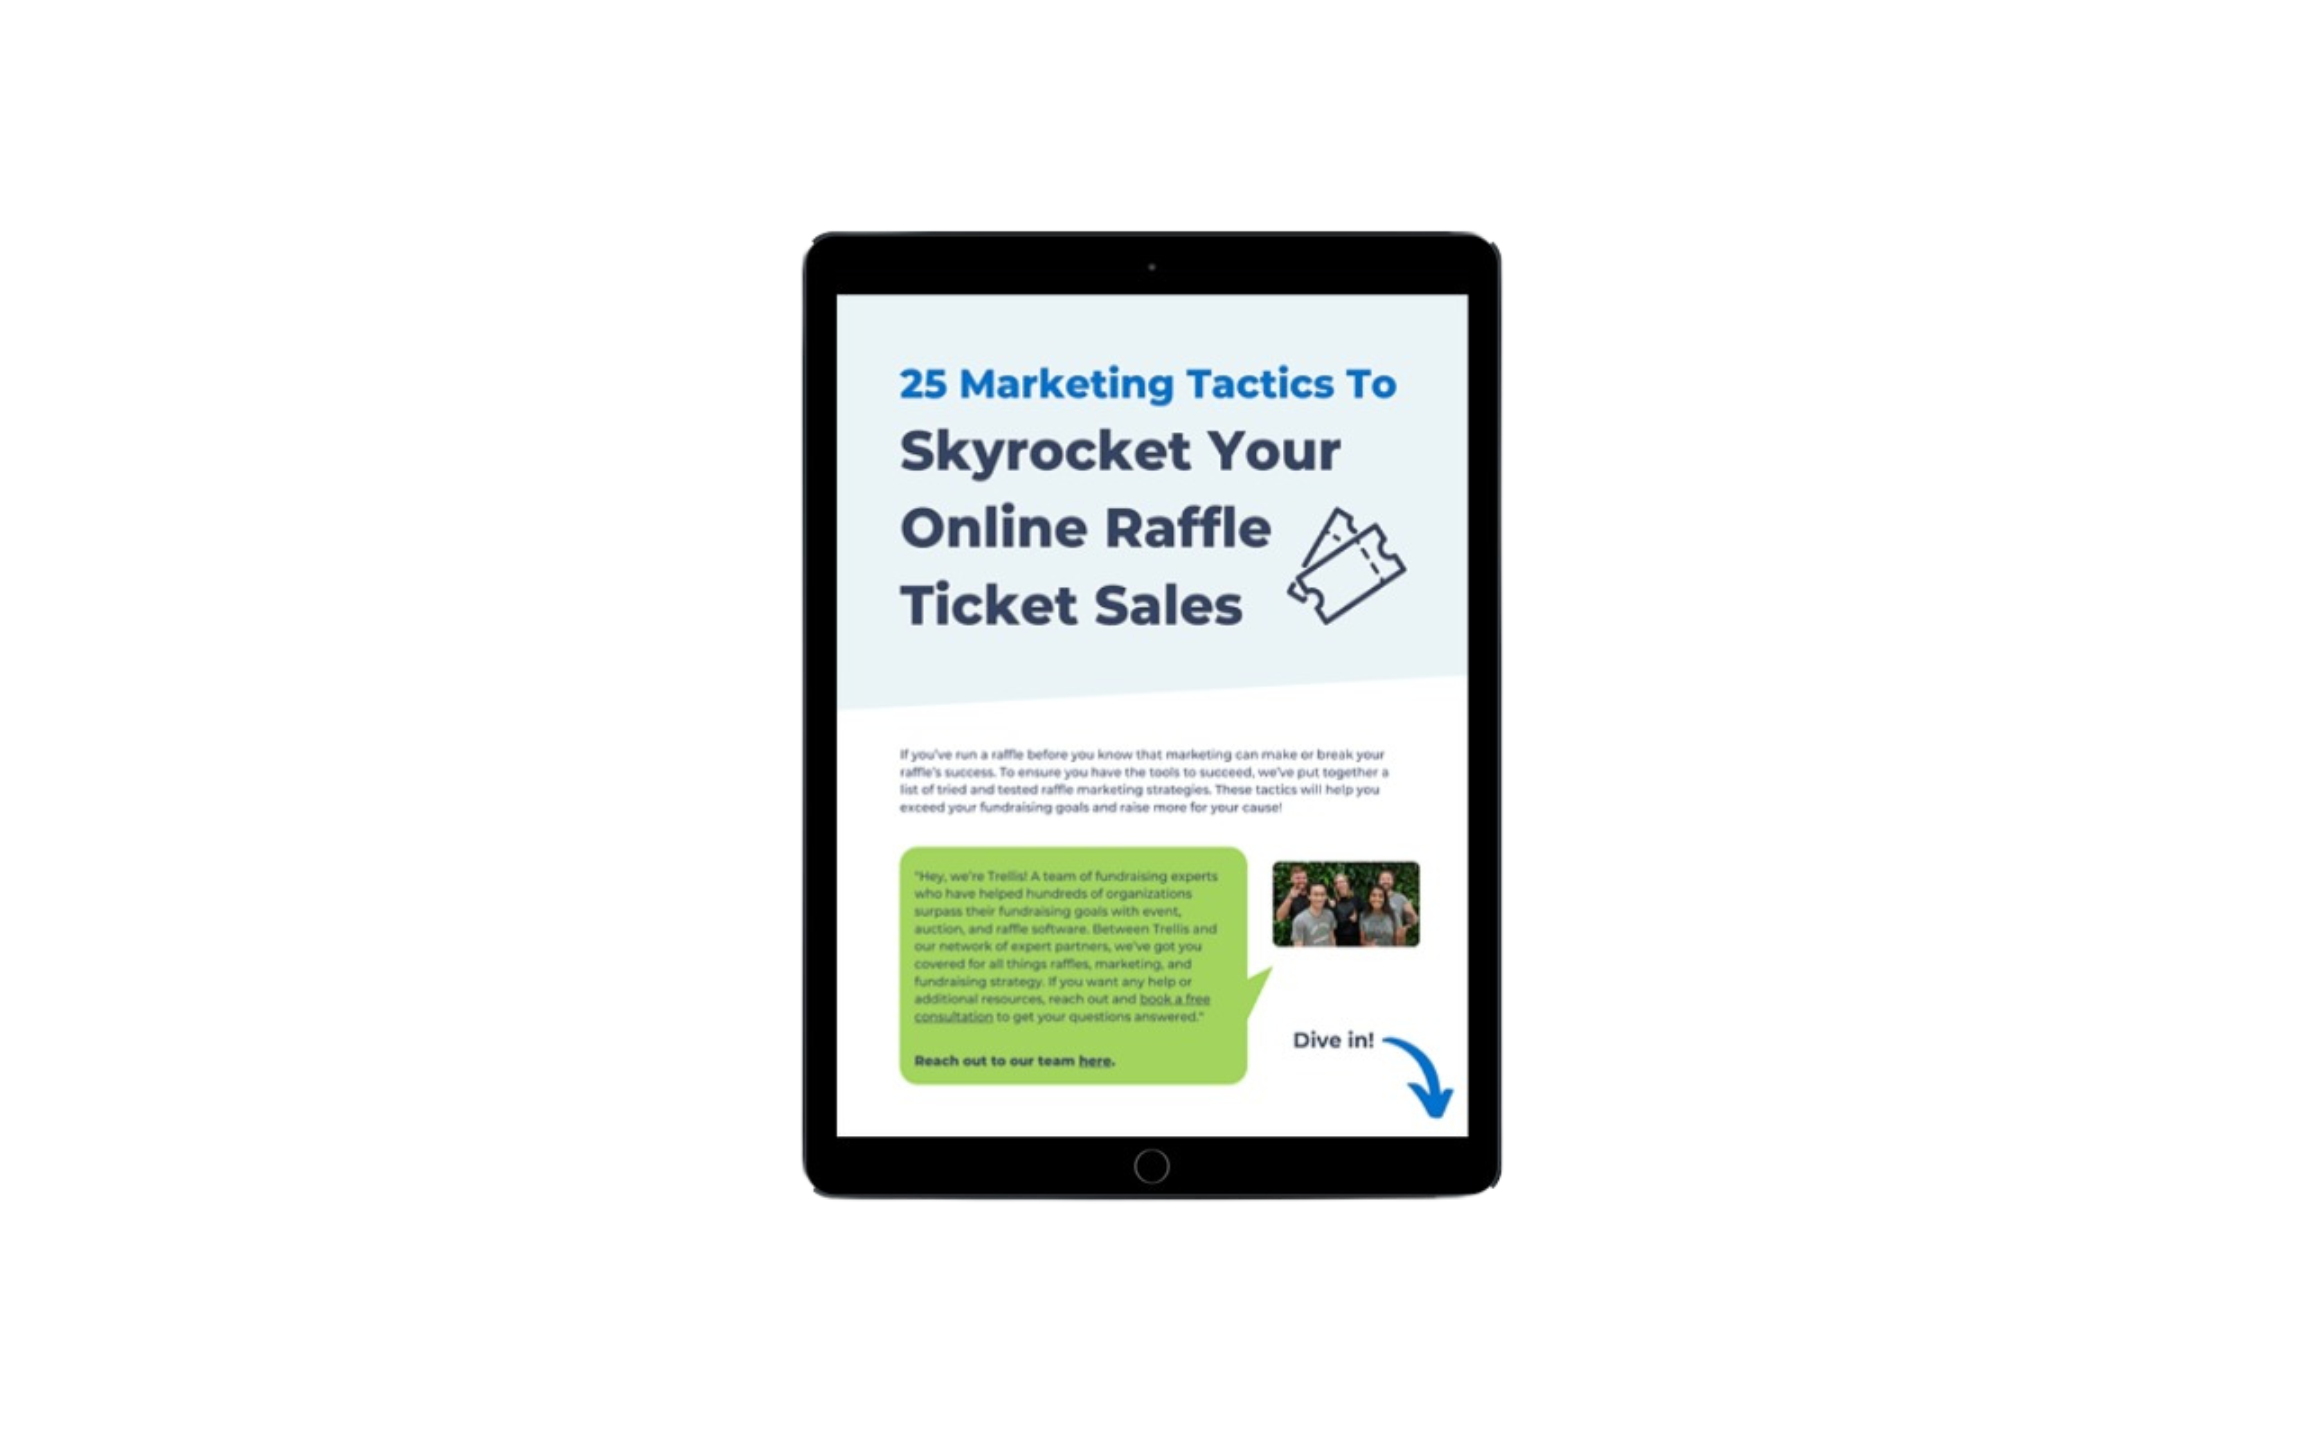 25 Marketing Tactics To Skyrocket Your Online Raffle Ticket Sales